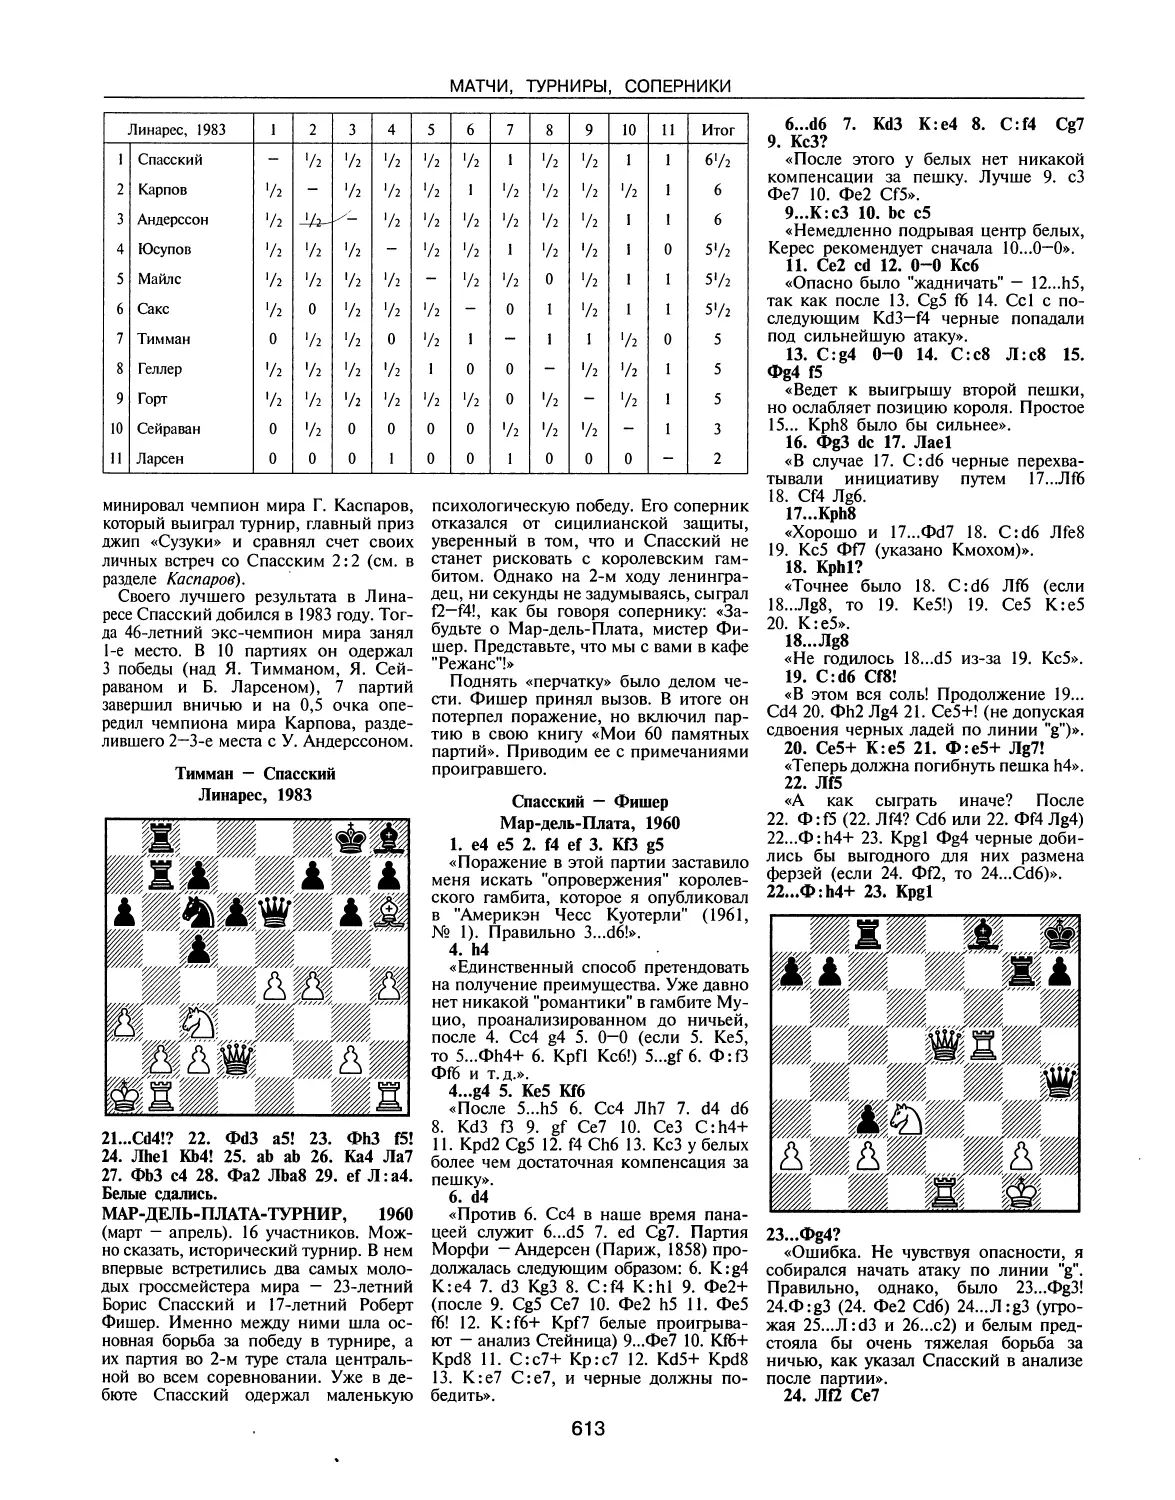 Мар-дель-Плата-турнир, 1960